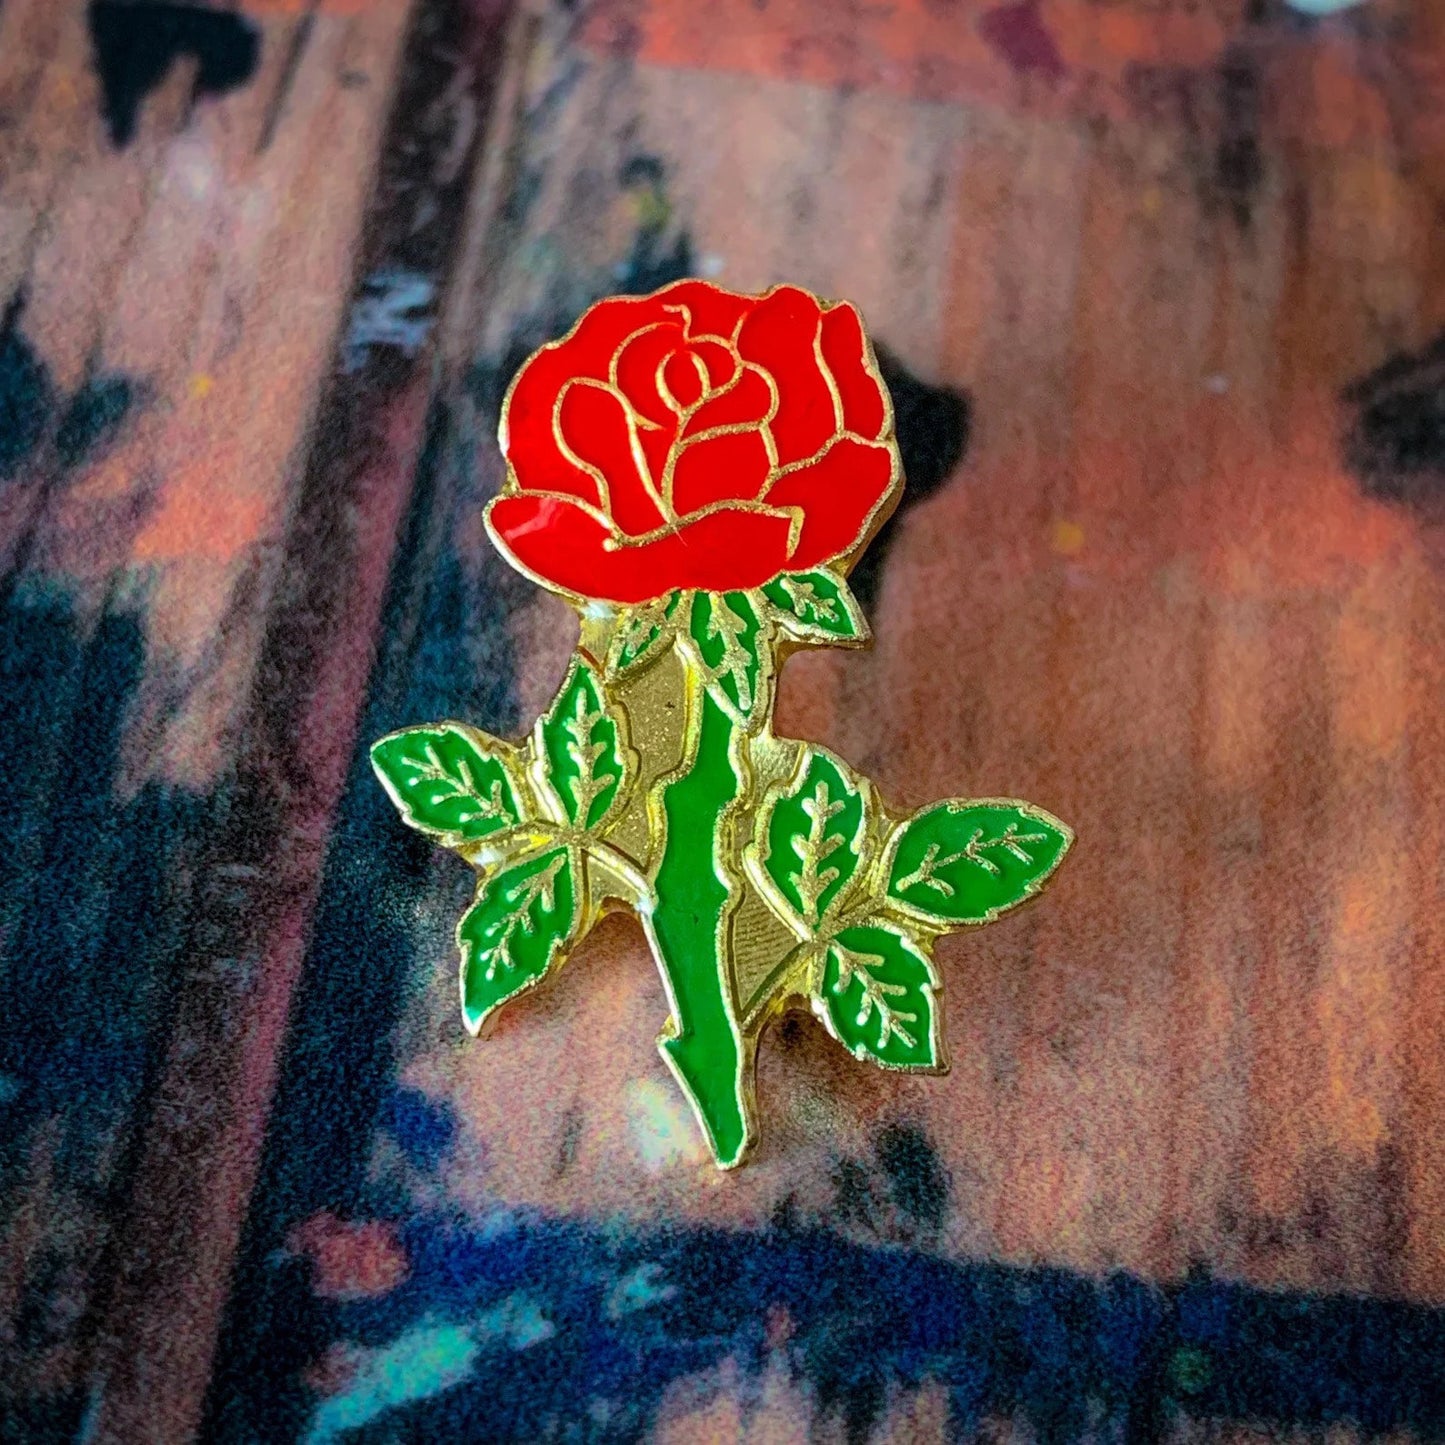 Vintage 1980s Thorny Red Rose Enamel Pin